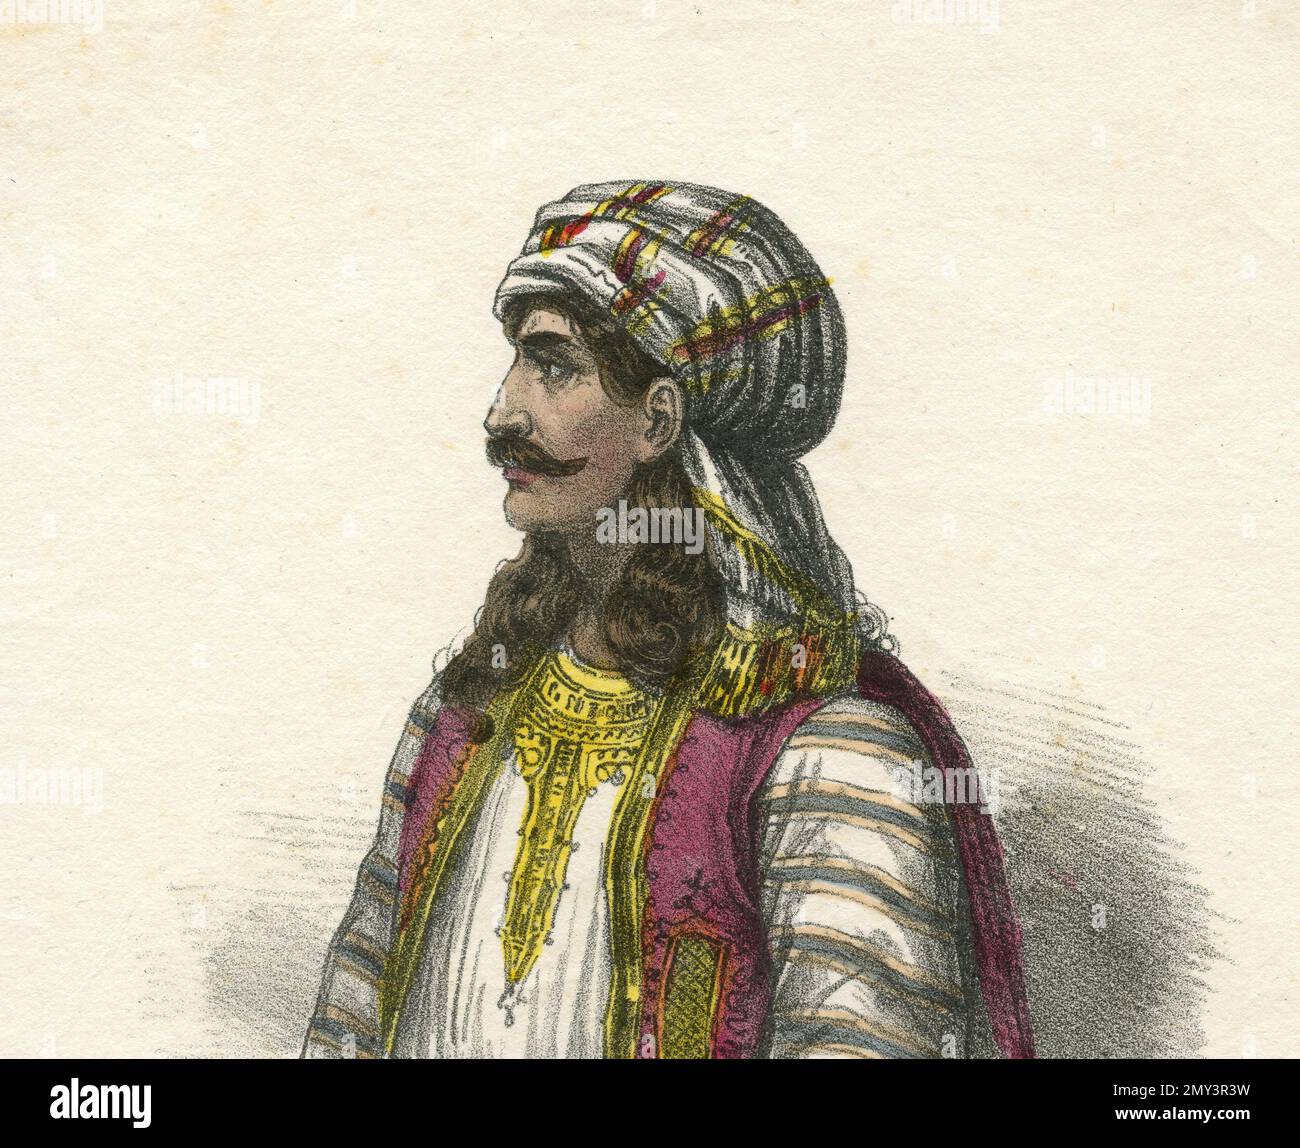 Portrait of Greek army officer Demetrius Ypsalanti, color illustration, 1800s Stock Photo